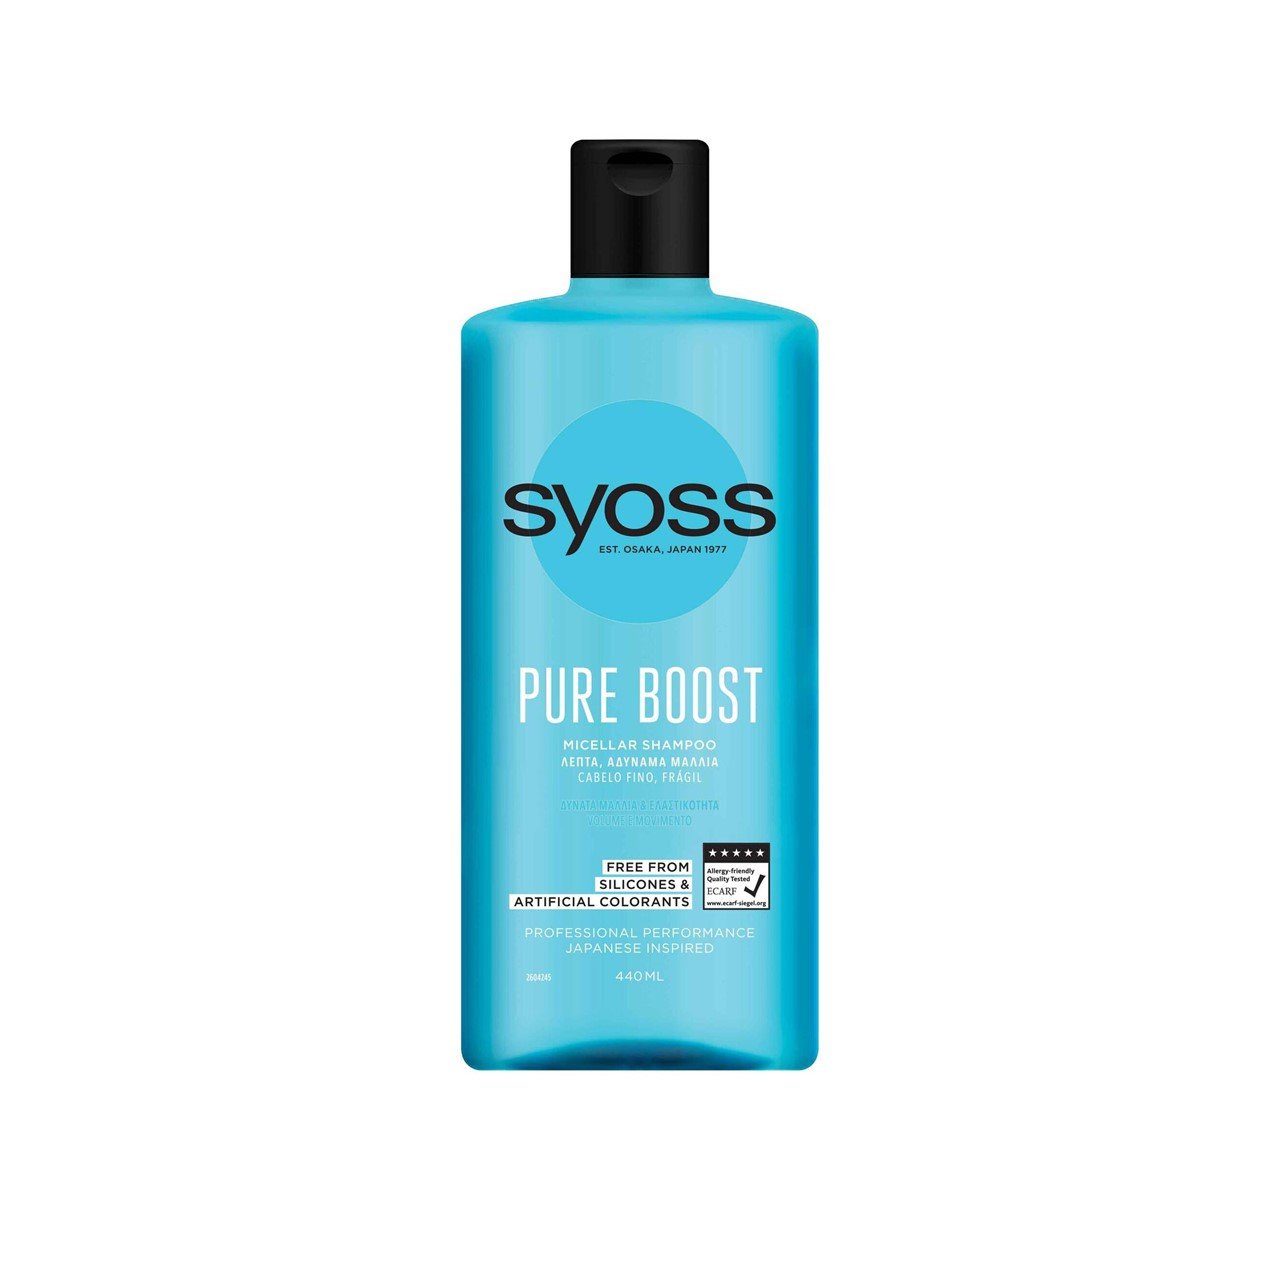 Syoss Pure Boost Micellar Shampoo 440ml (14.88fl oz)